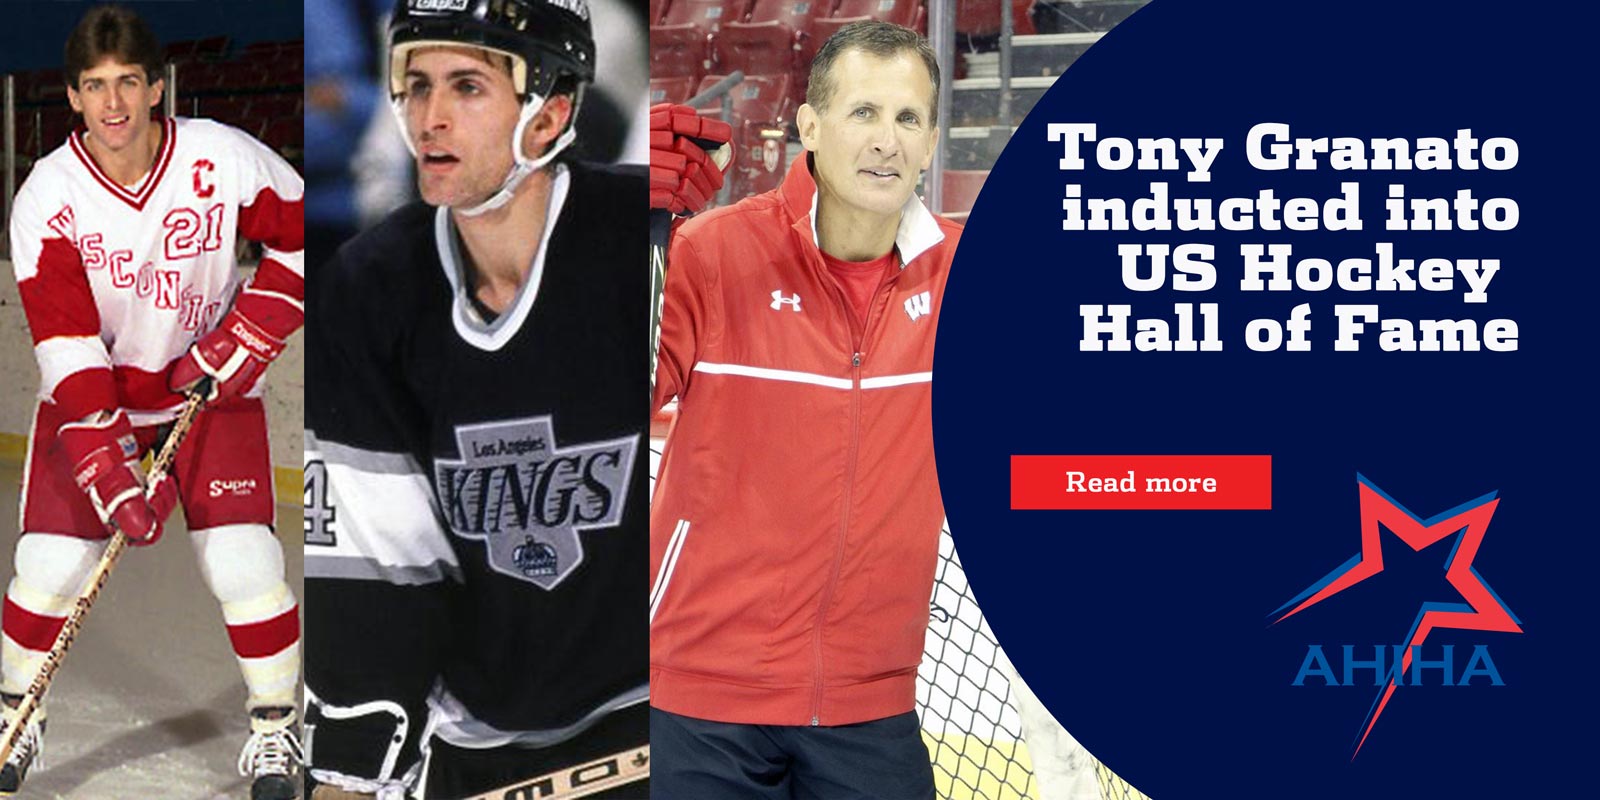 Tony Granato inducted into the U.S. Hockey Hall of Fame